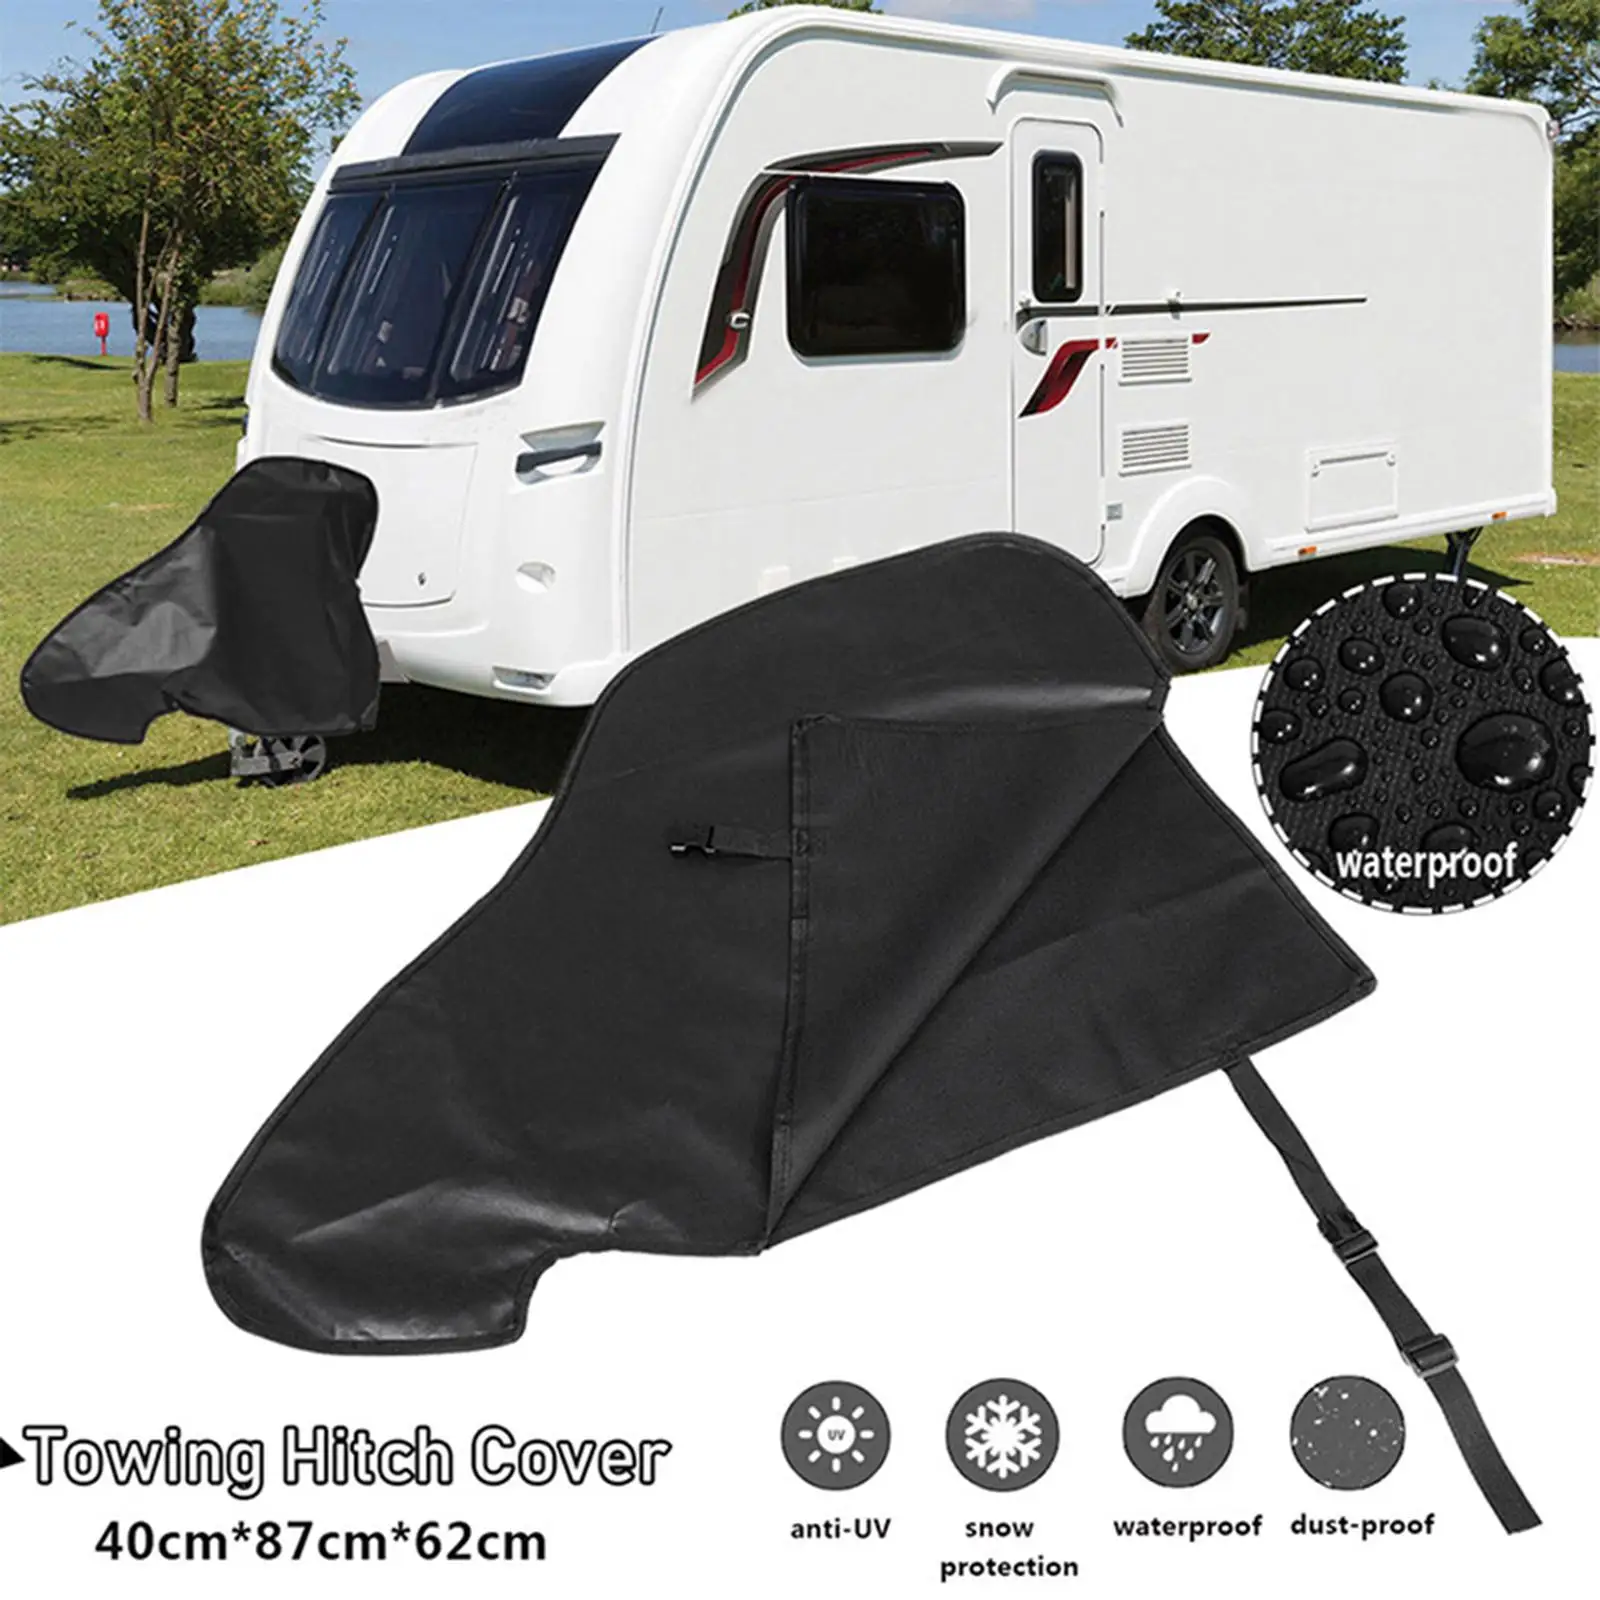 

PVC Caravan Towing Hitch Cover, RV UV Blockage Rain Snow Ptotector Hook Connector Cover, Dustproof Trailer Universal Campervan